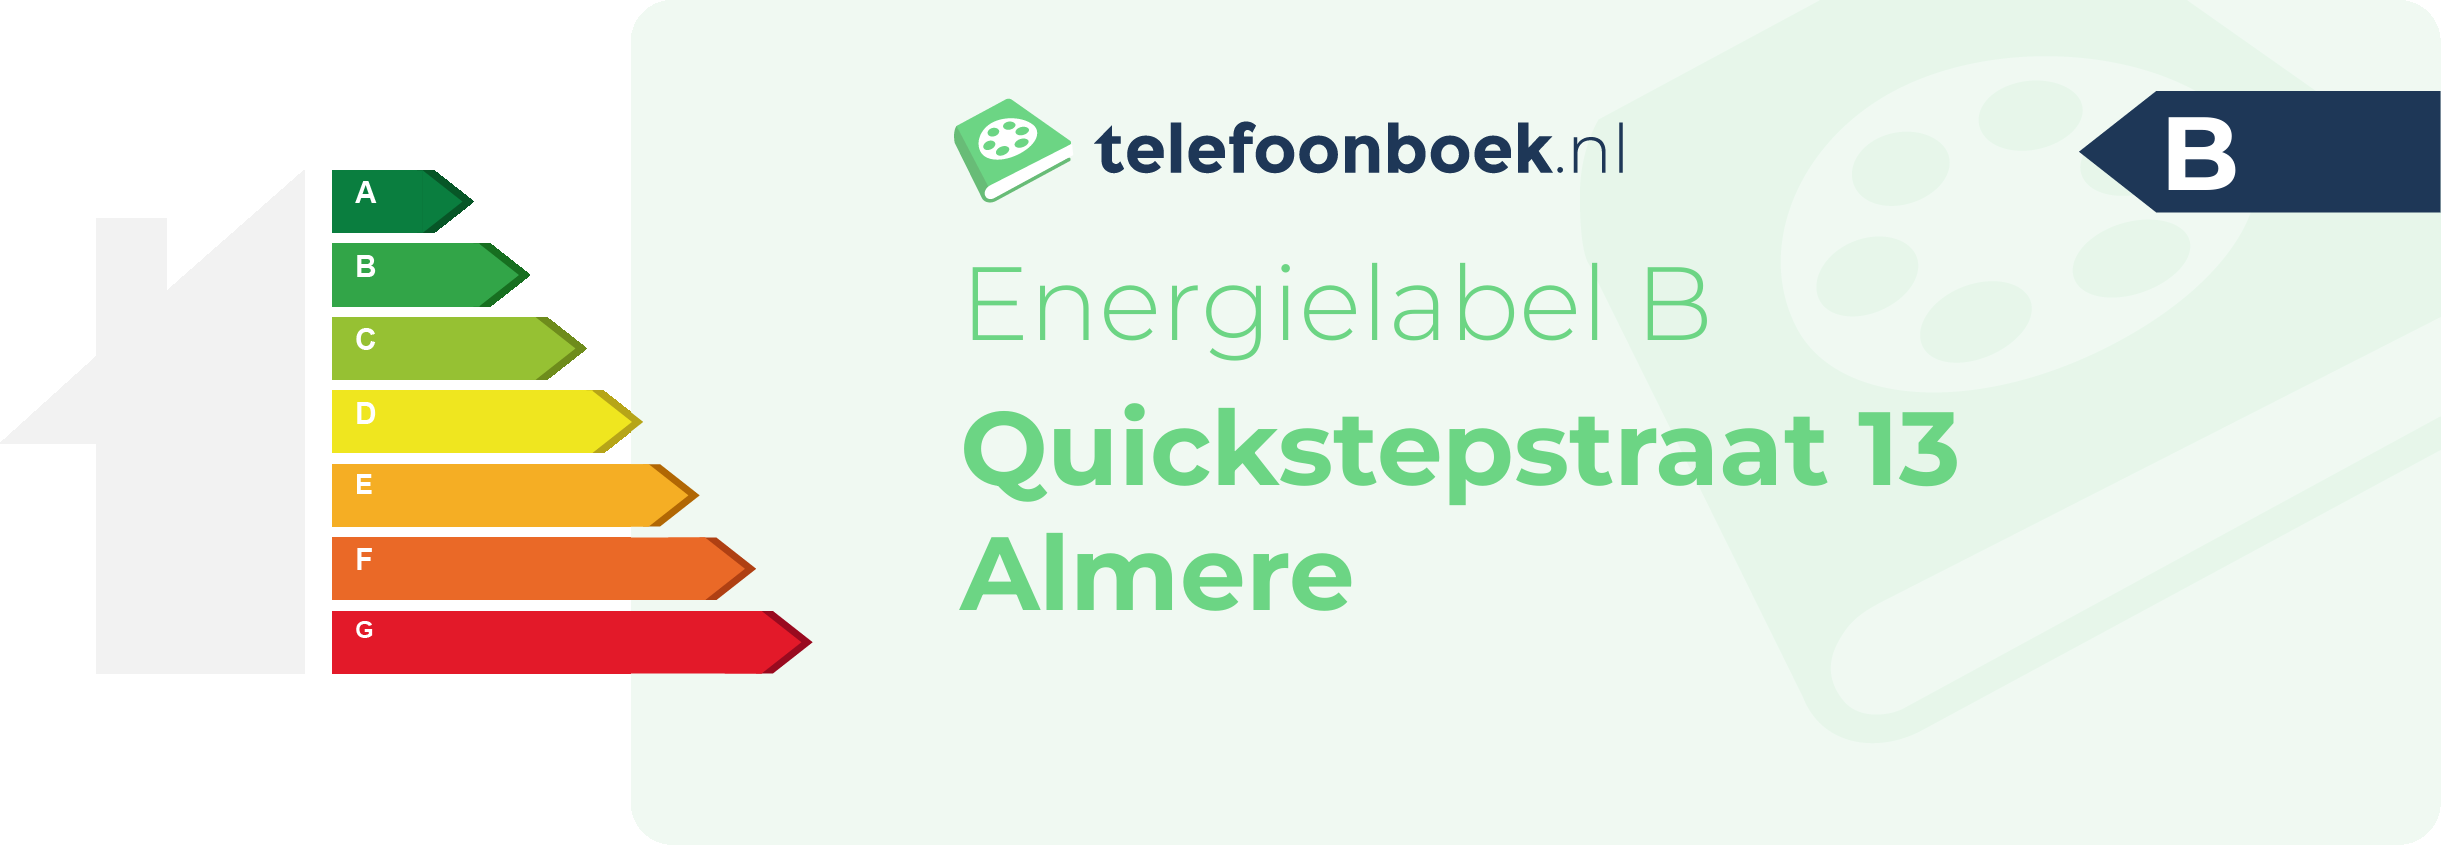 Energielabel Quickstepstraat 13 Almere